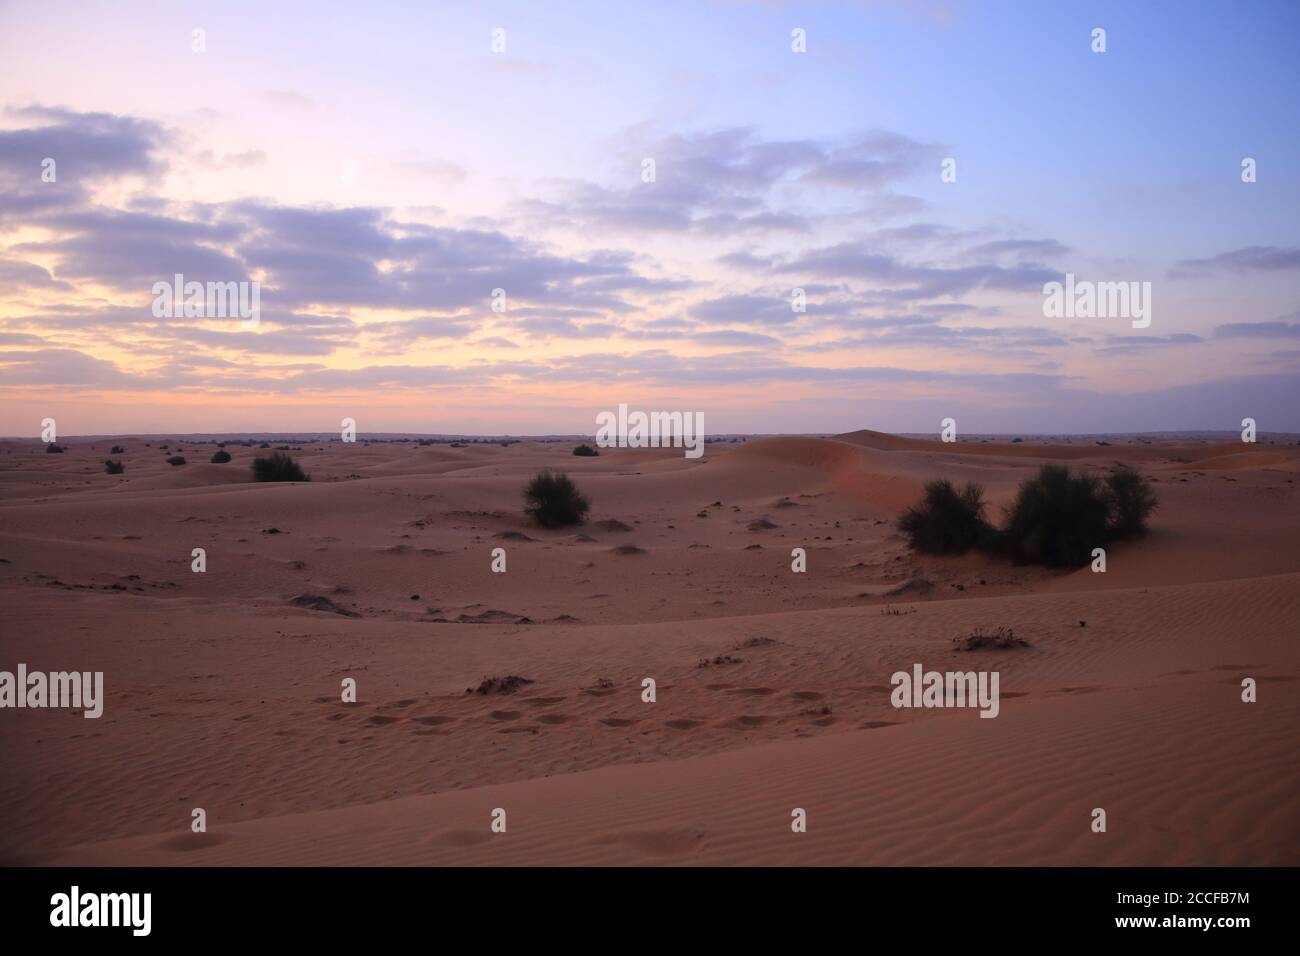 Sunrise in the desert at Abu Dhabi, UAE Stock Photo